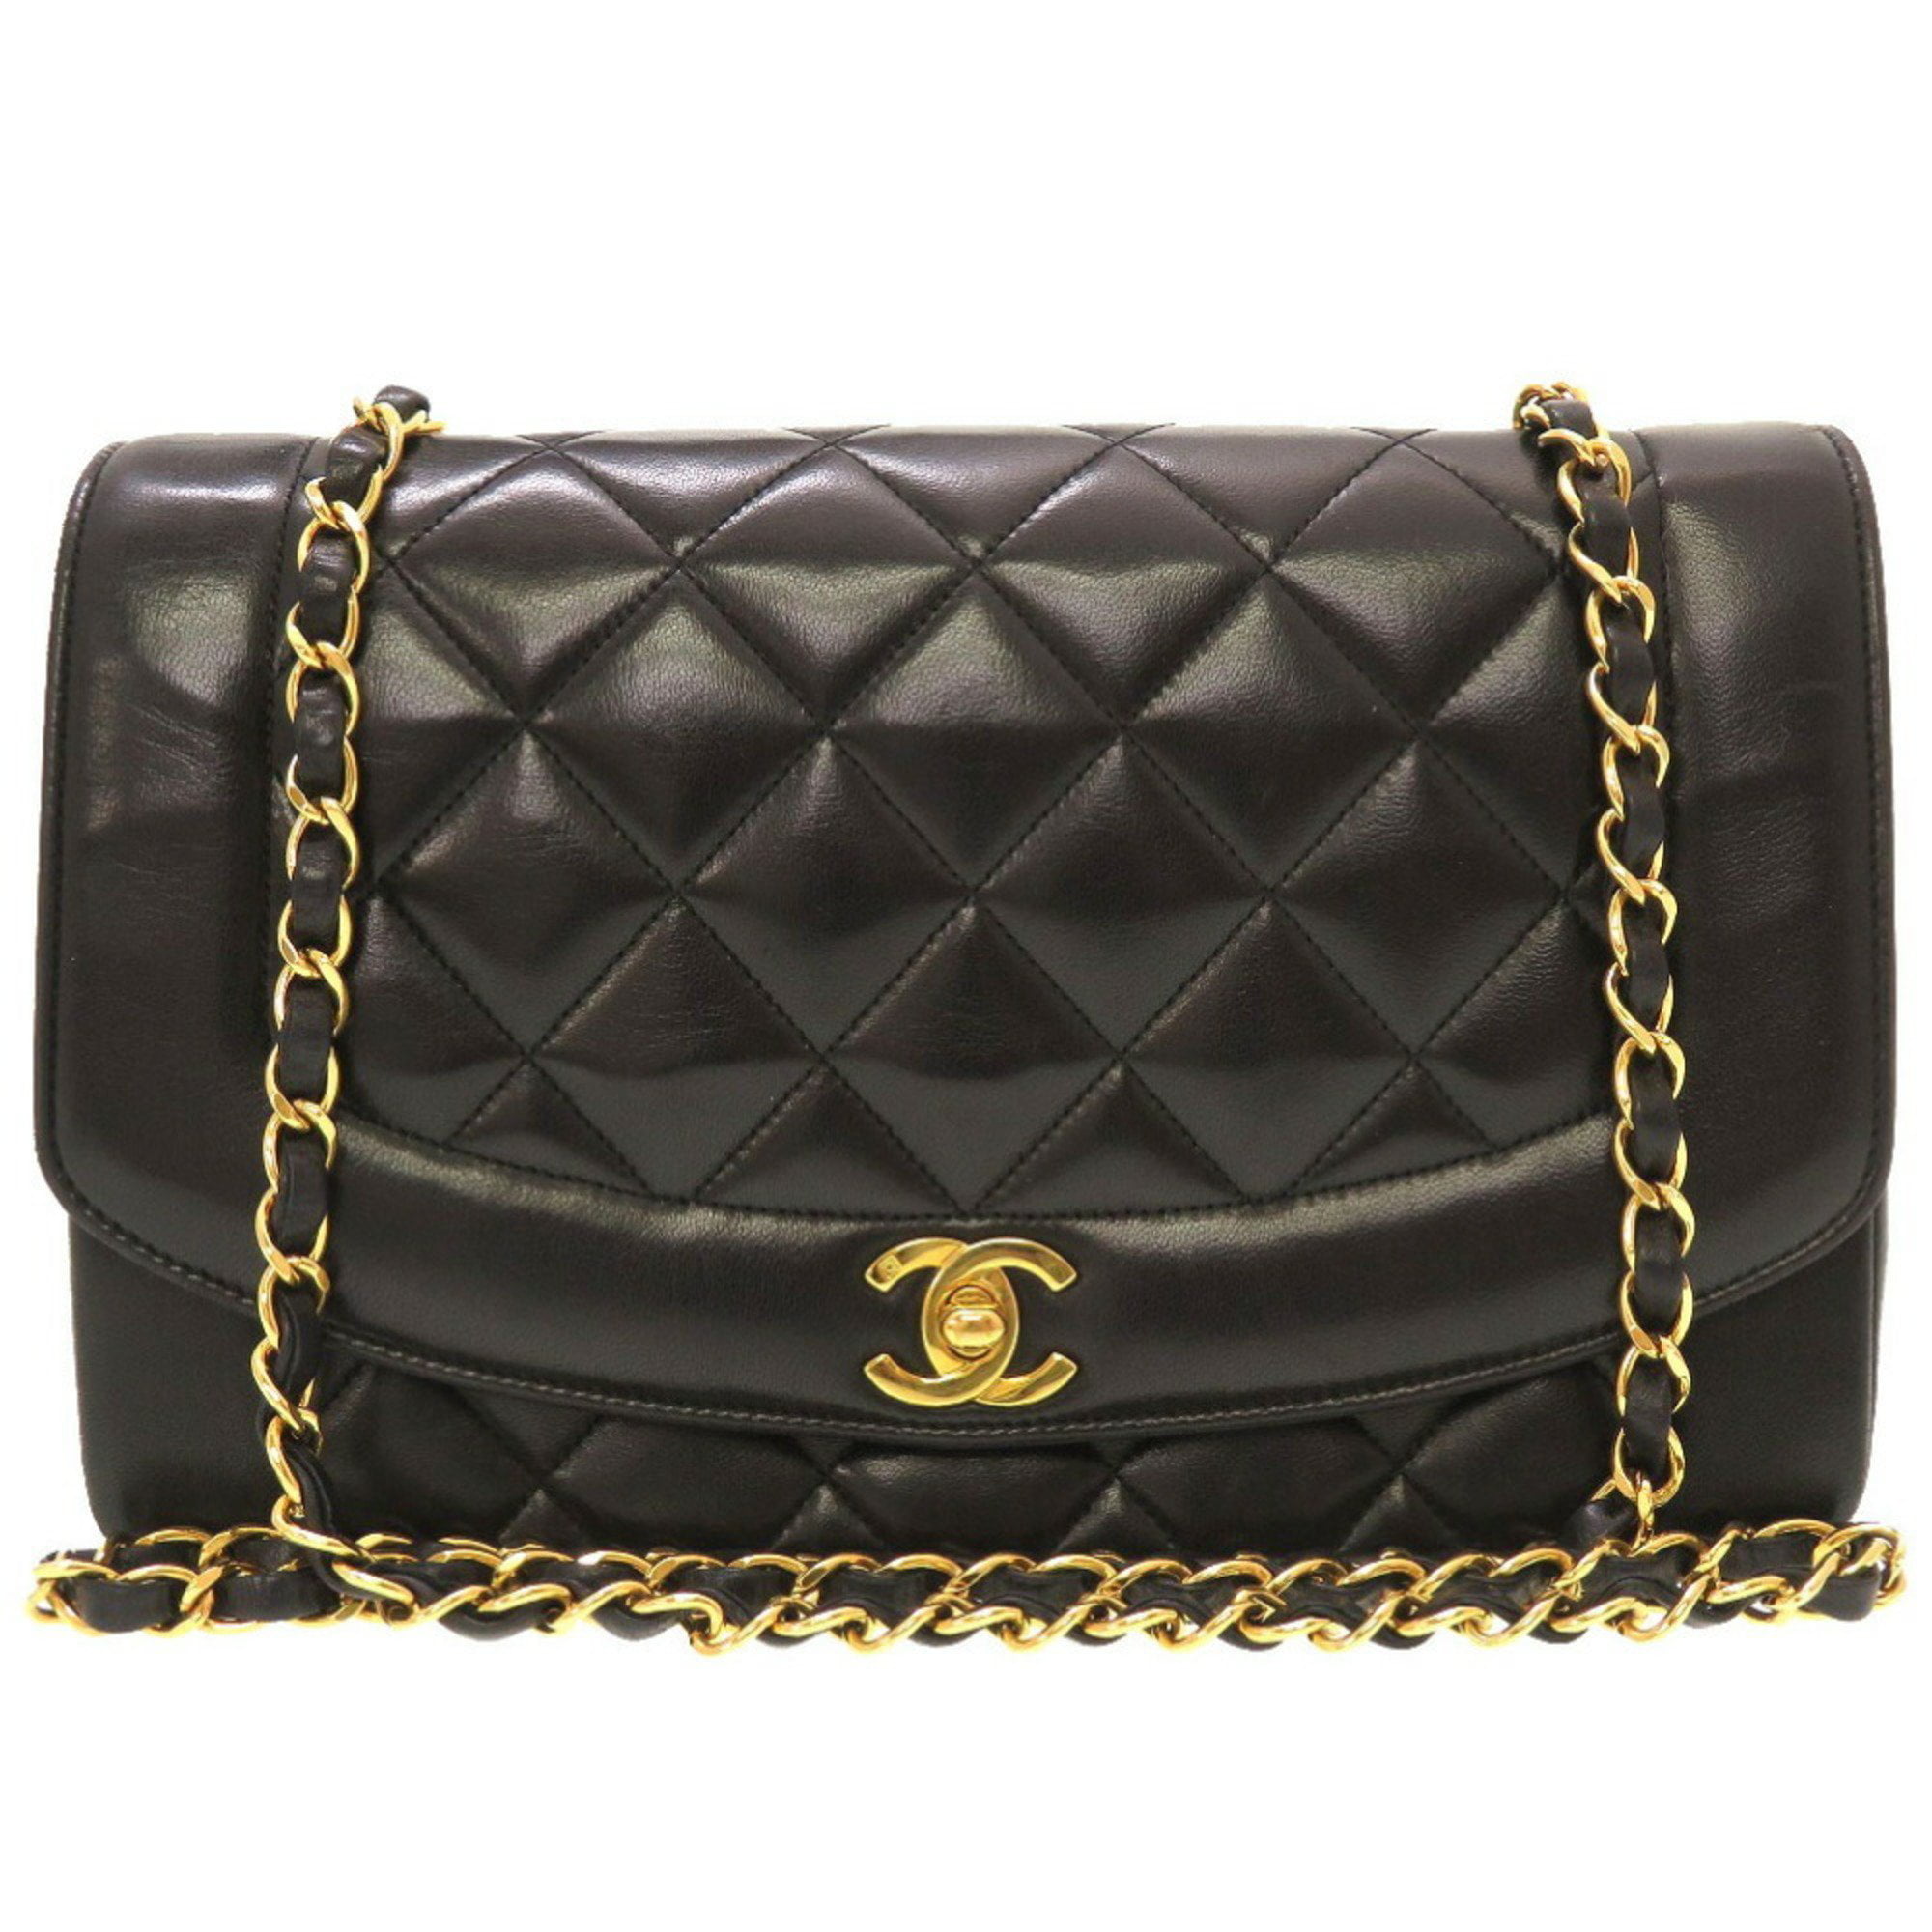 Chanel Diana Bag Medium Lambskin Black